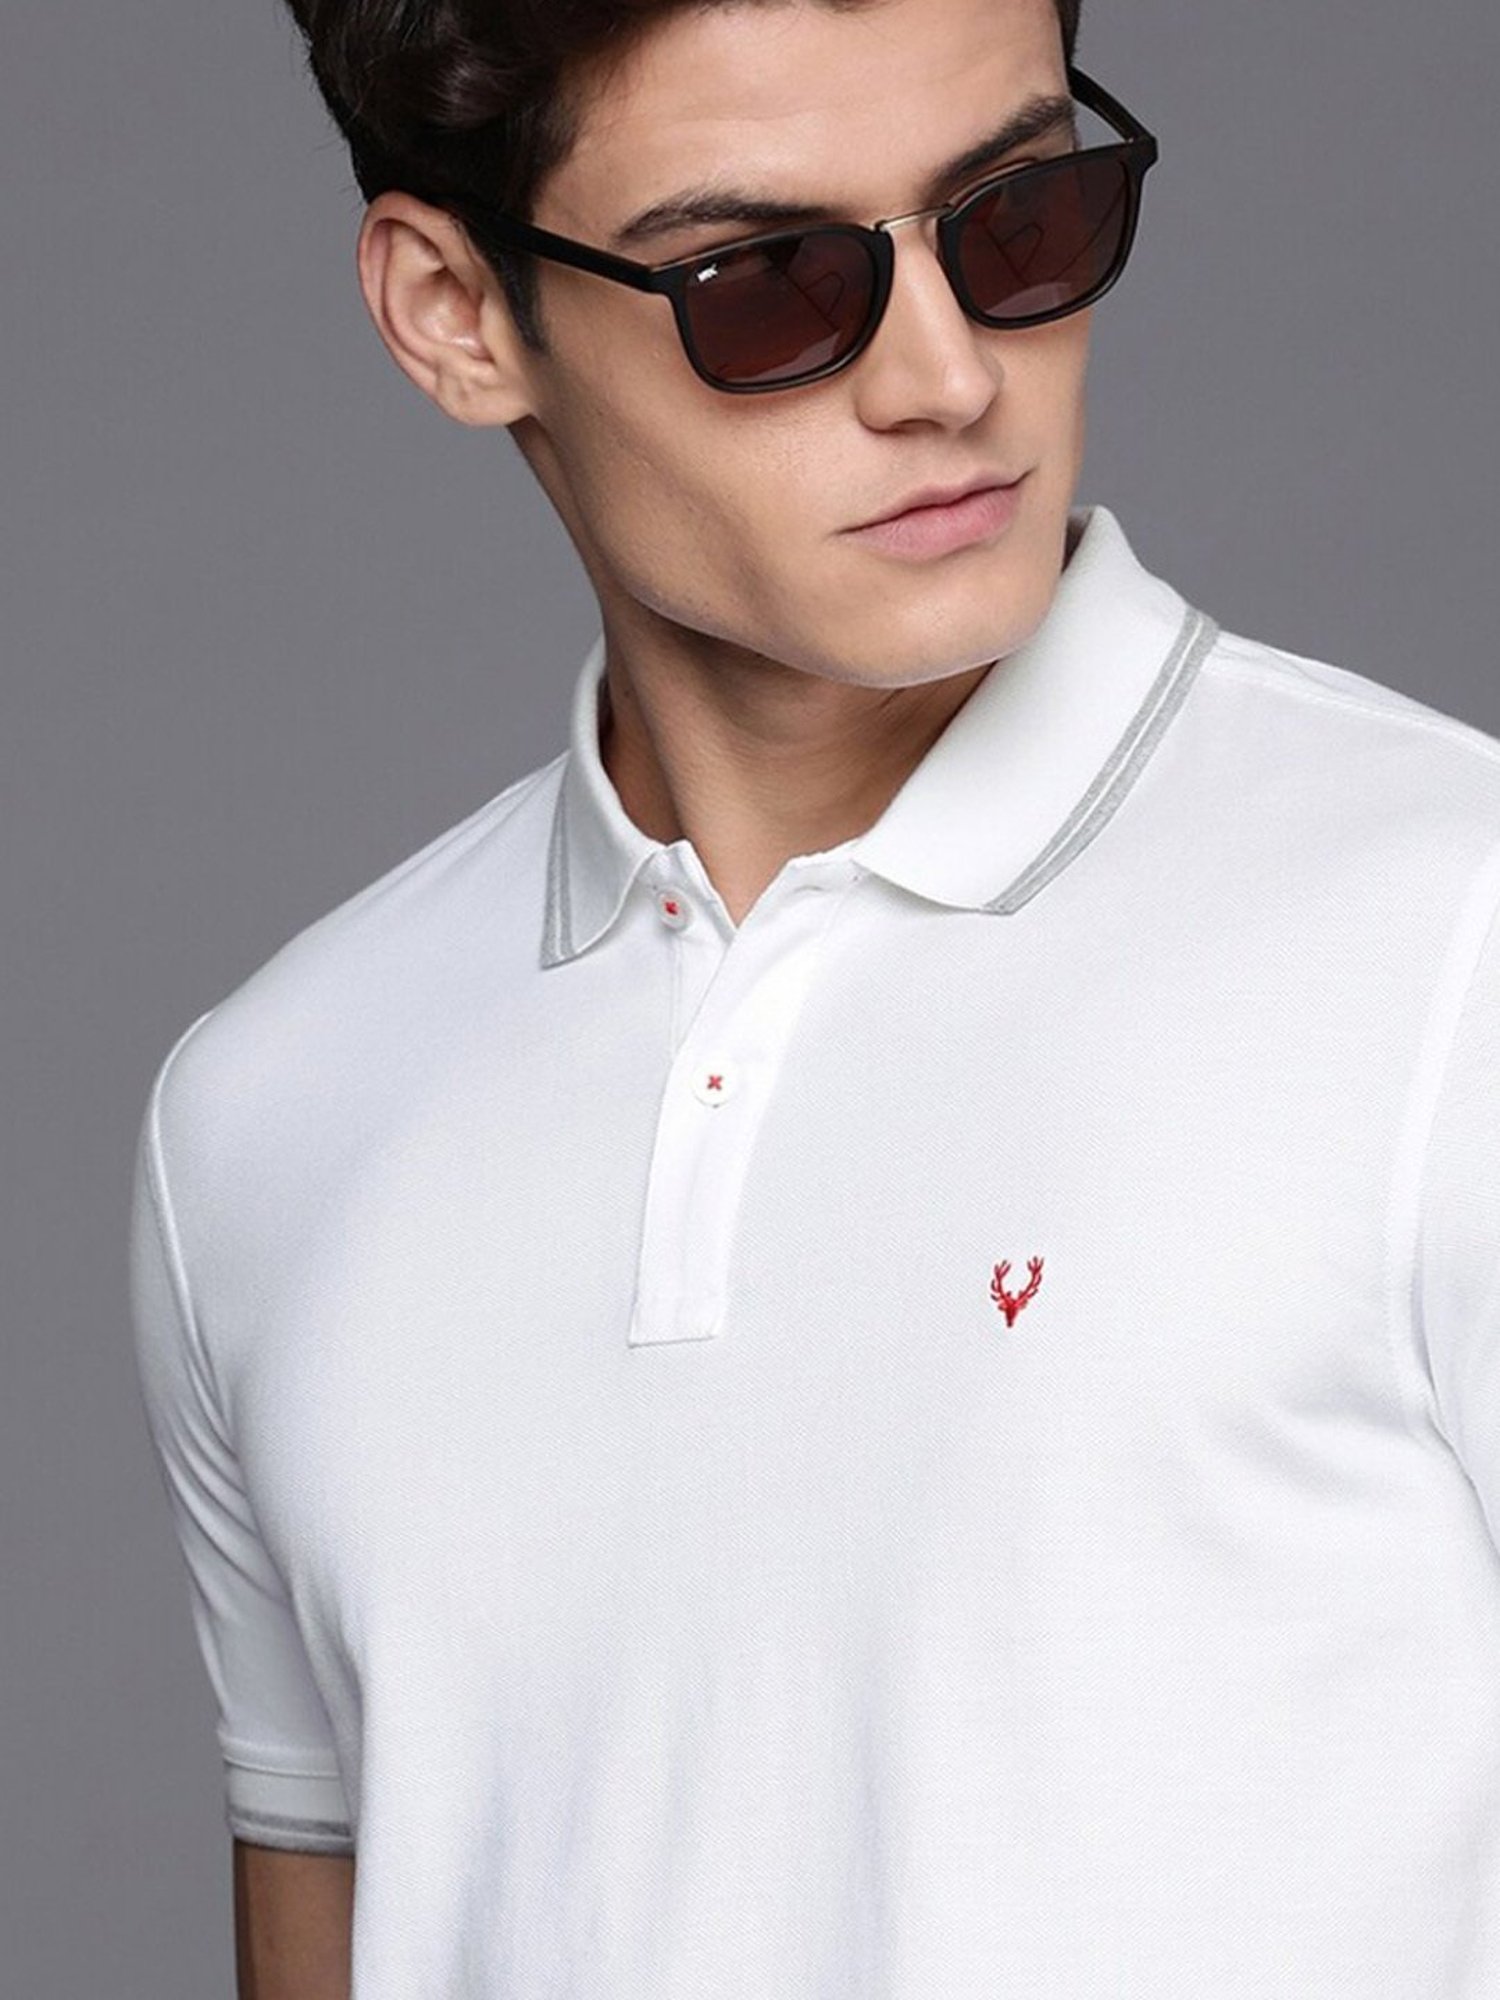 Buy Allen Solly Men Sunglasses AS232 C2 - Sunglasses for Men 51724 | Myntra